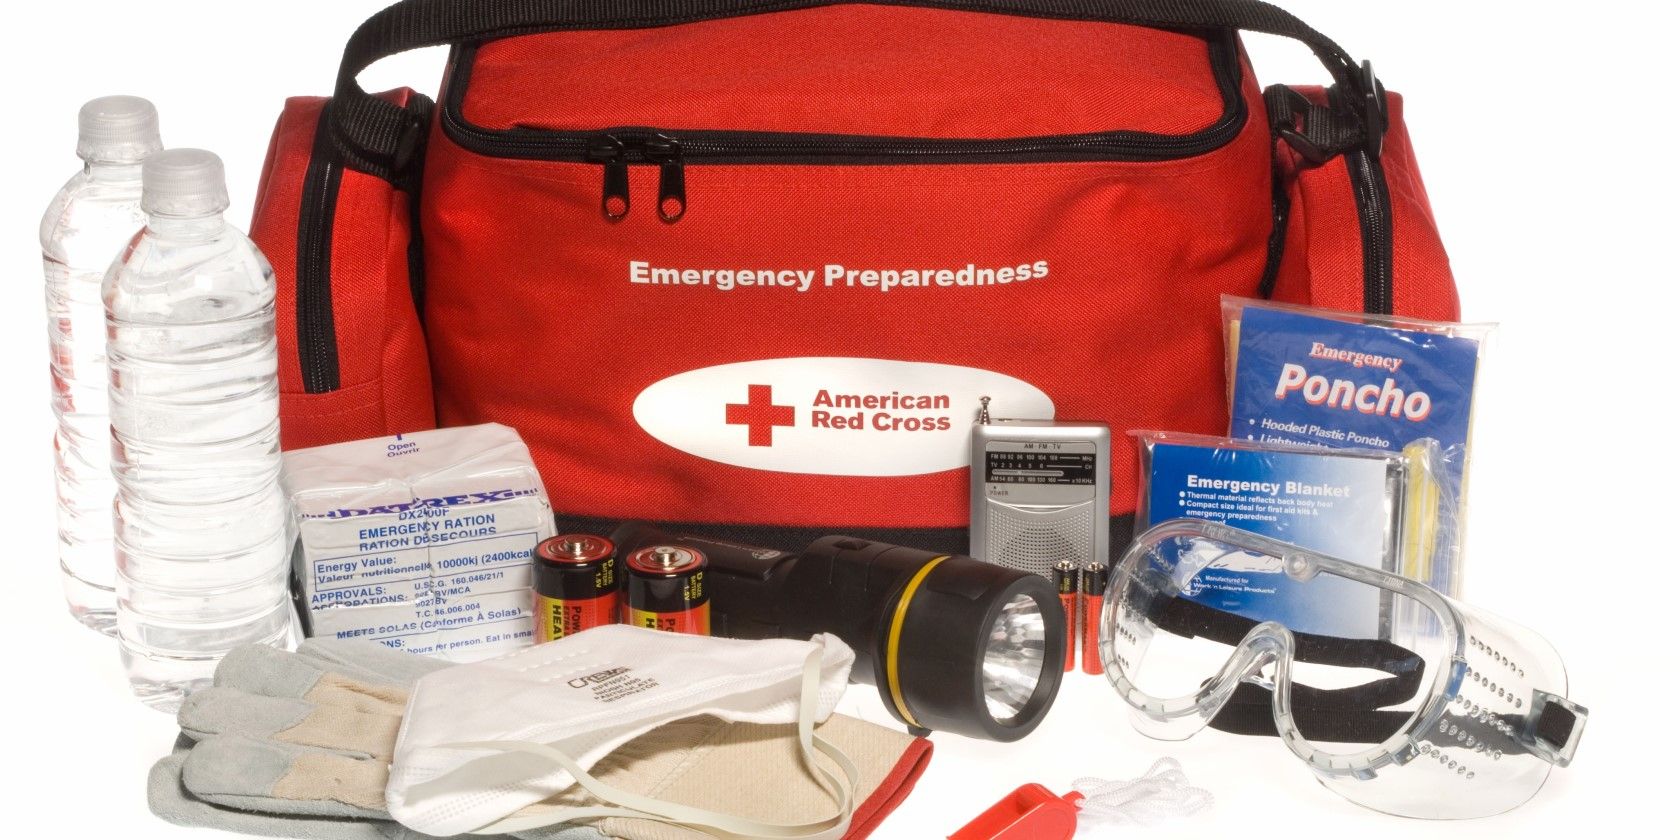 emergency preparedness bag with items